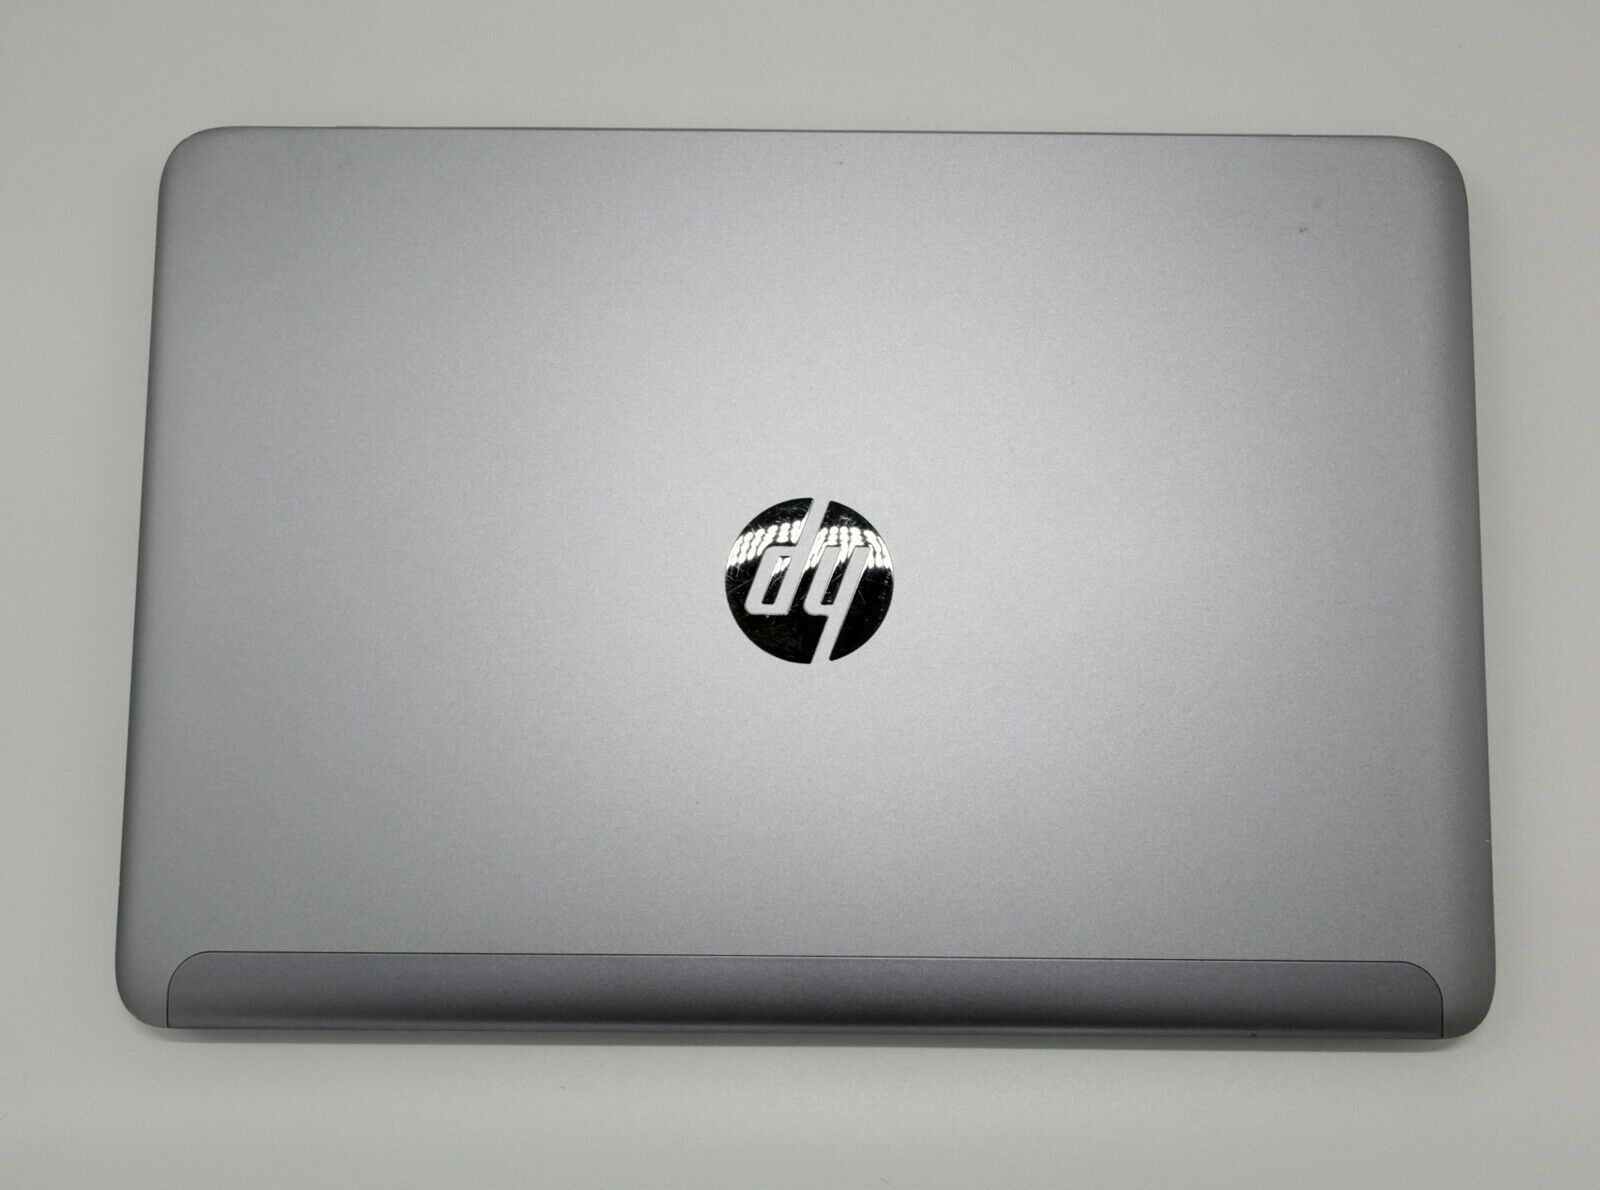 HP EliteBook 1040 Folio G1 UltraBook: Core i5, 8GB RAM, 240GB, VAT, Warranty - CruiseTech